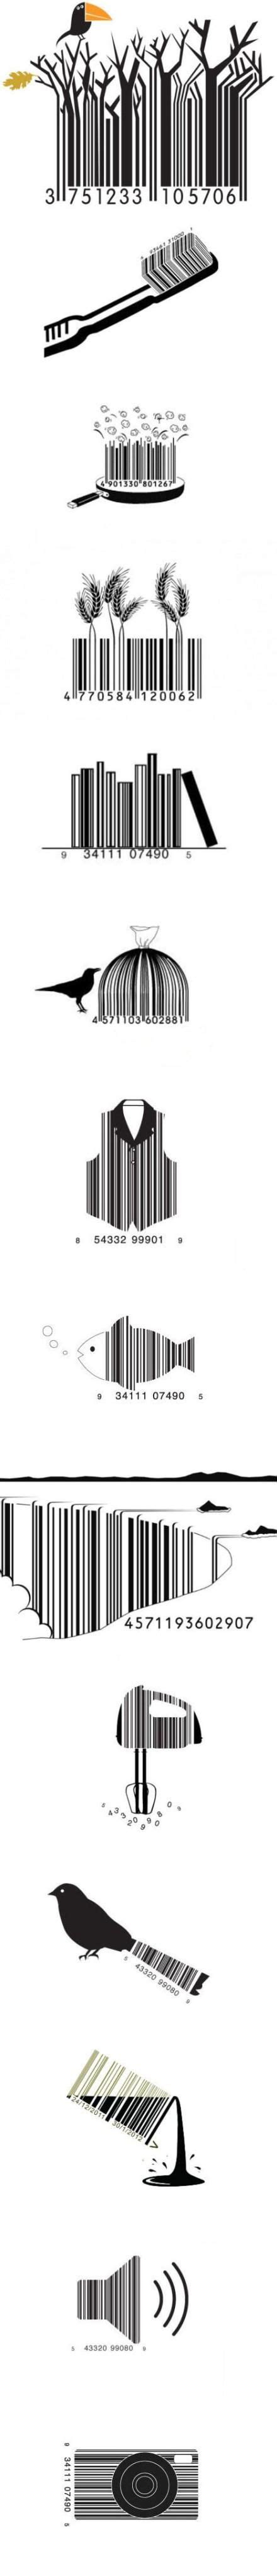 Creative Barcodes Ideas Design Barcode Design Barcode Art